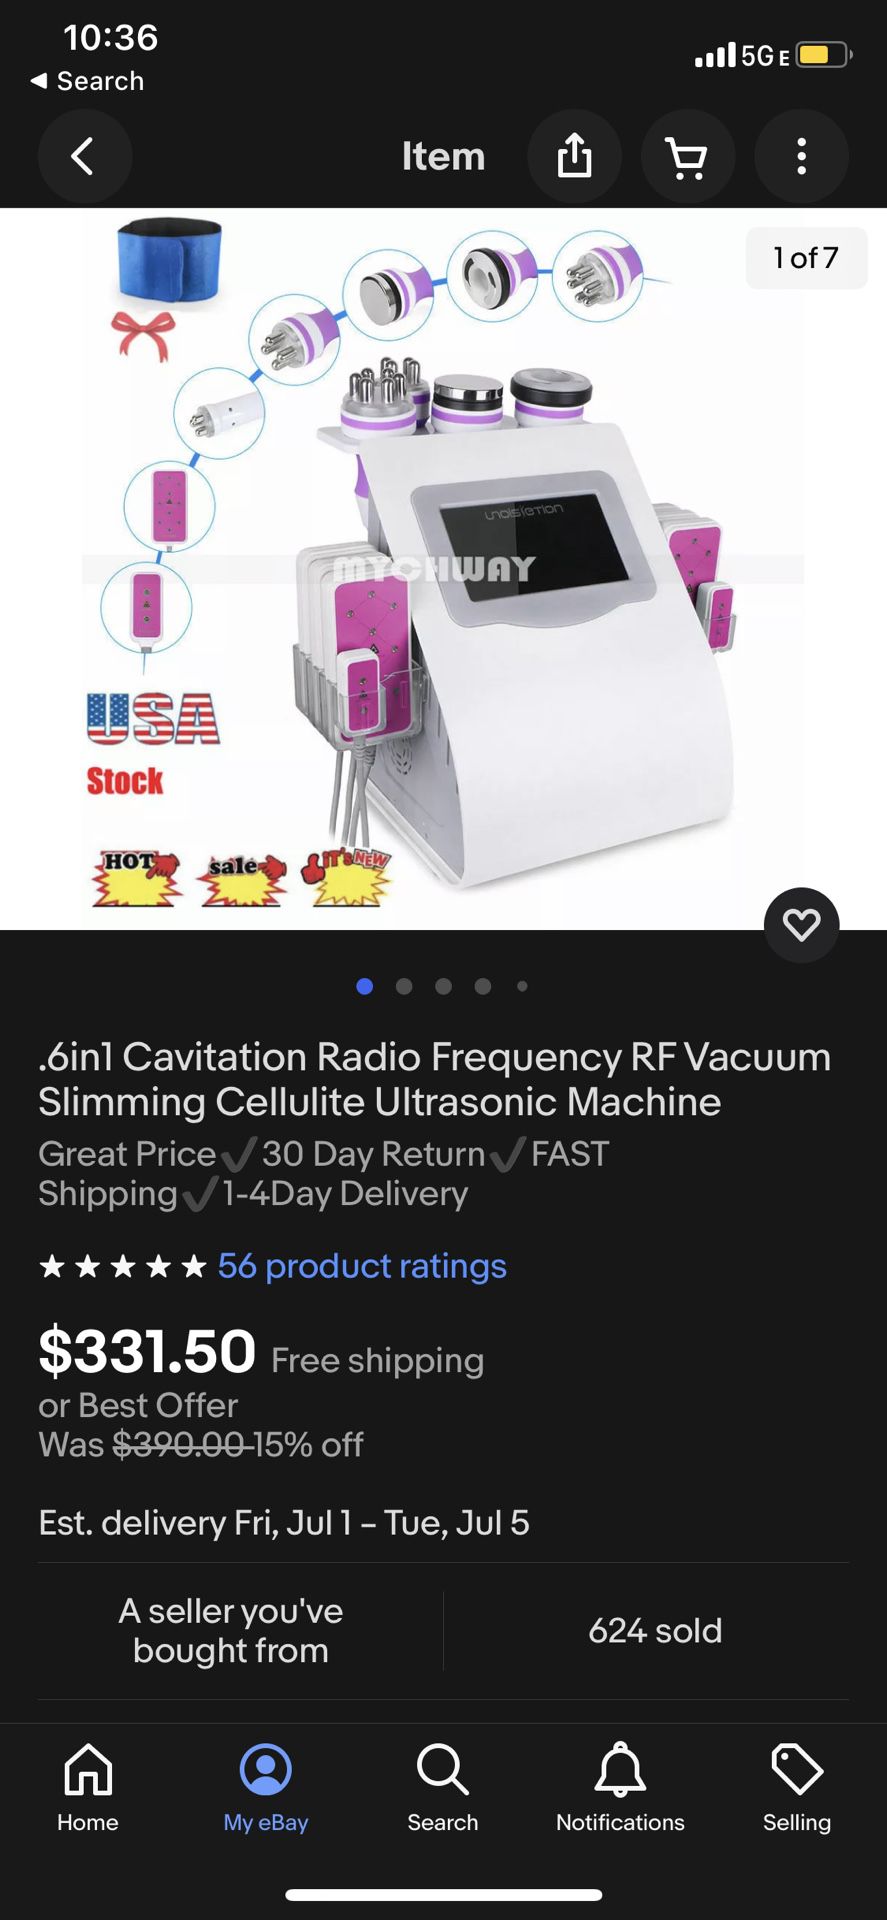 .6in1 Cavitation Radio Frequency RF Vacuum Ultrasonic Machine